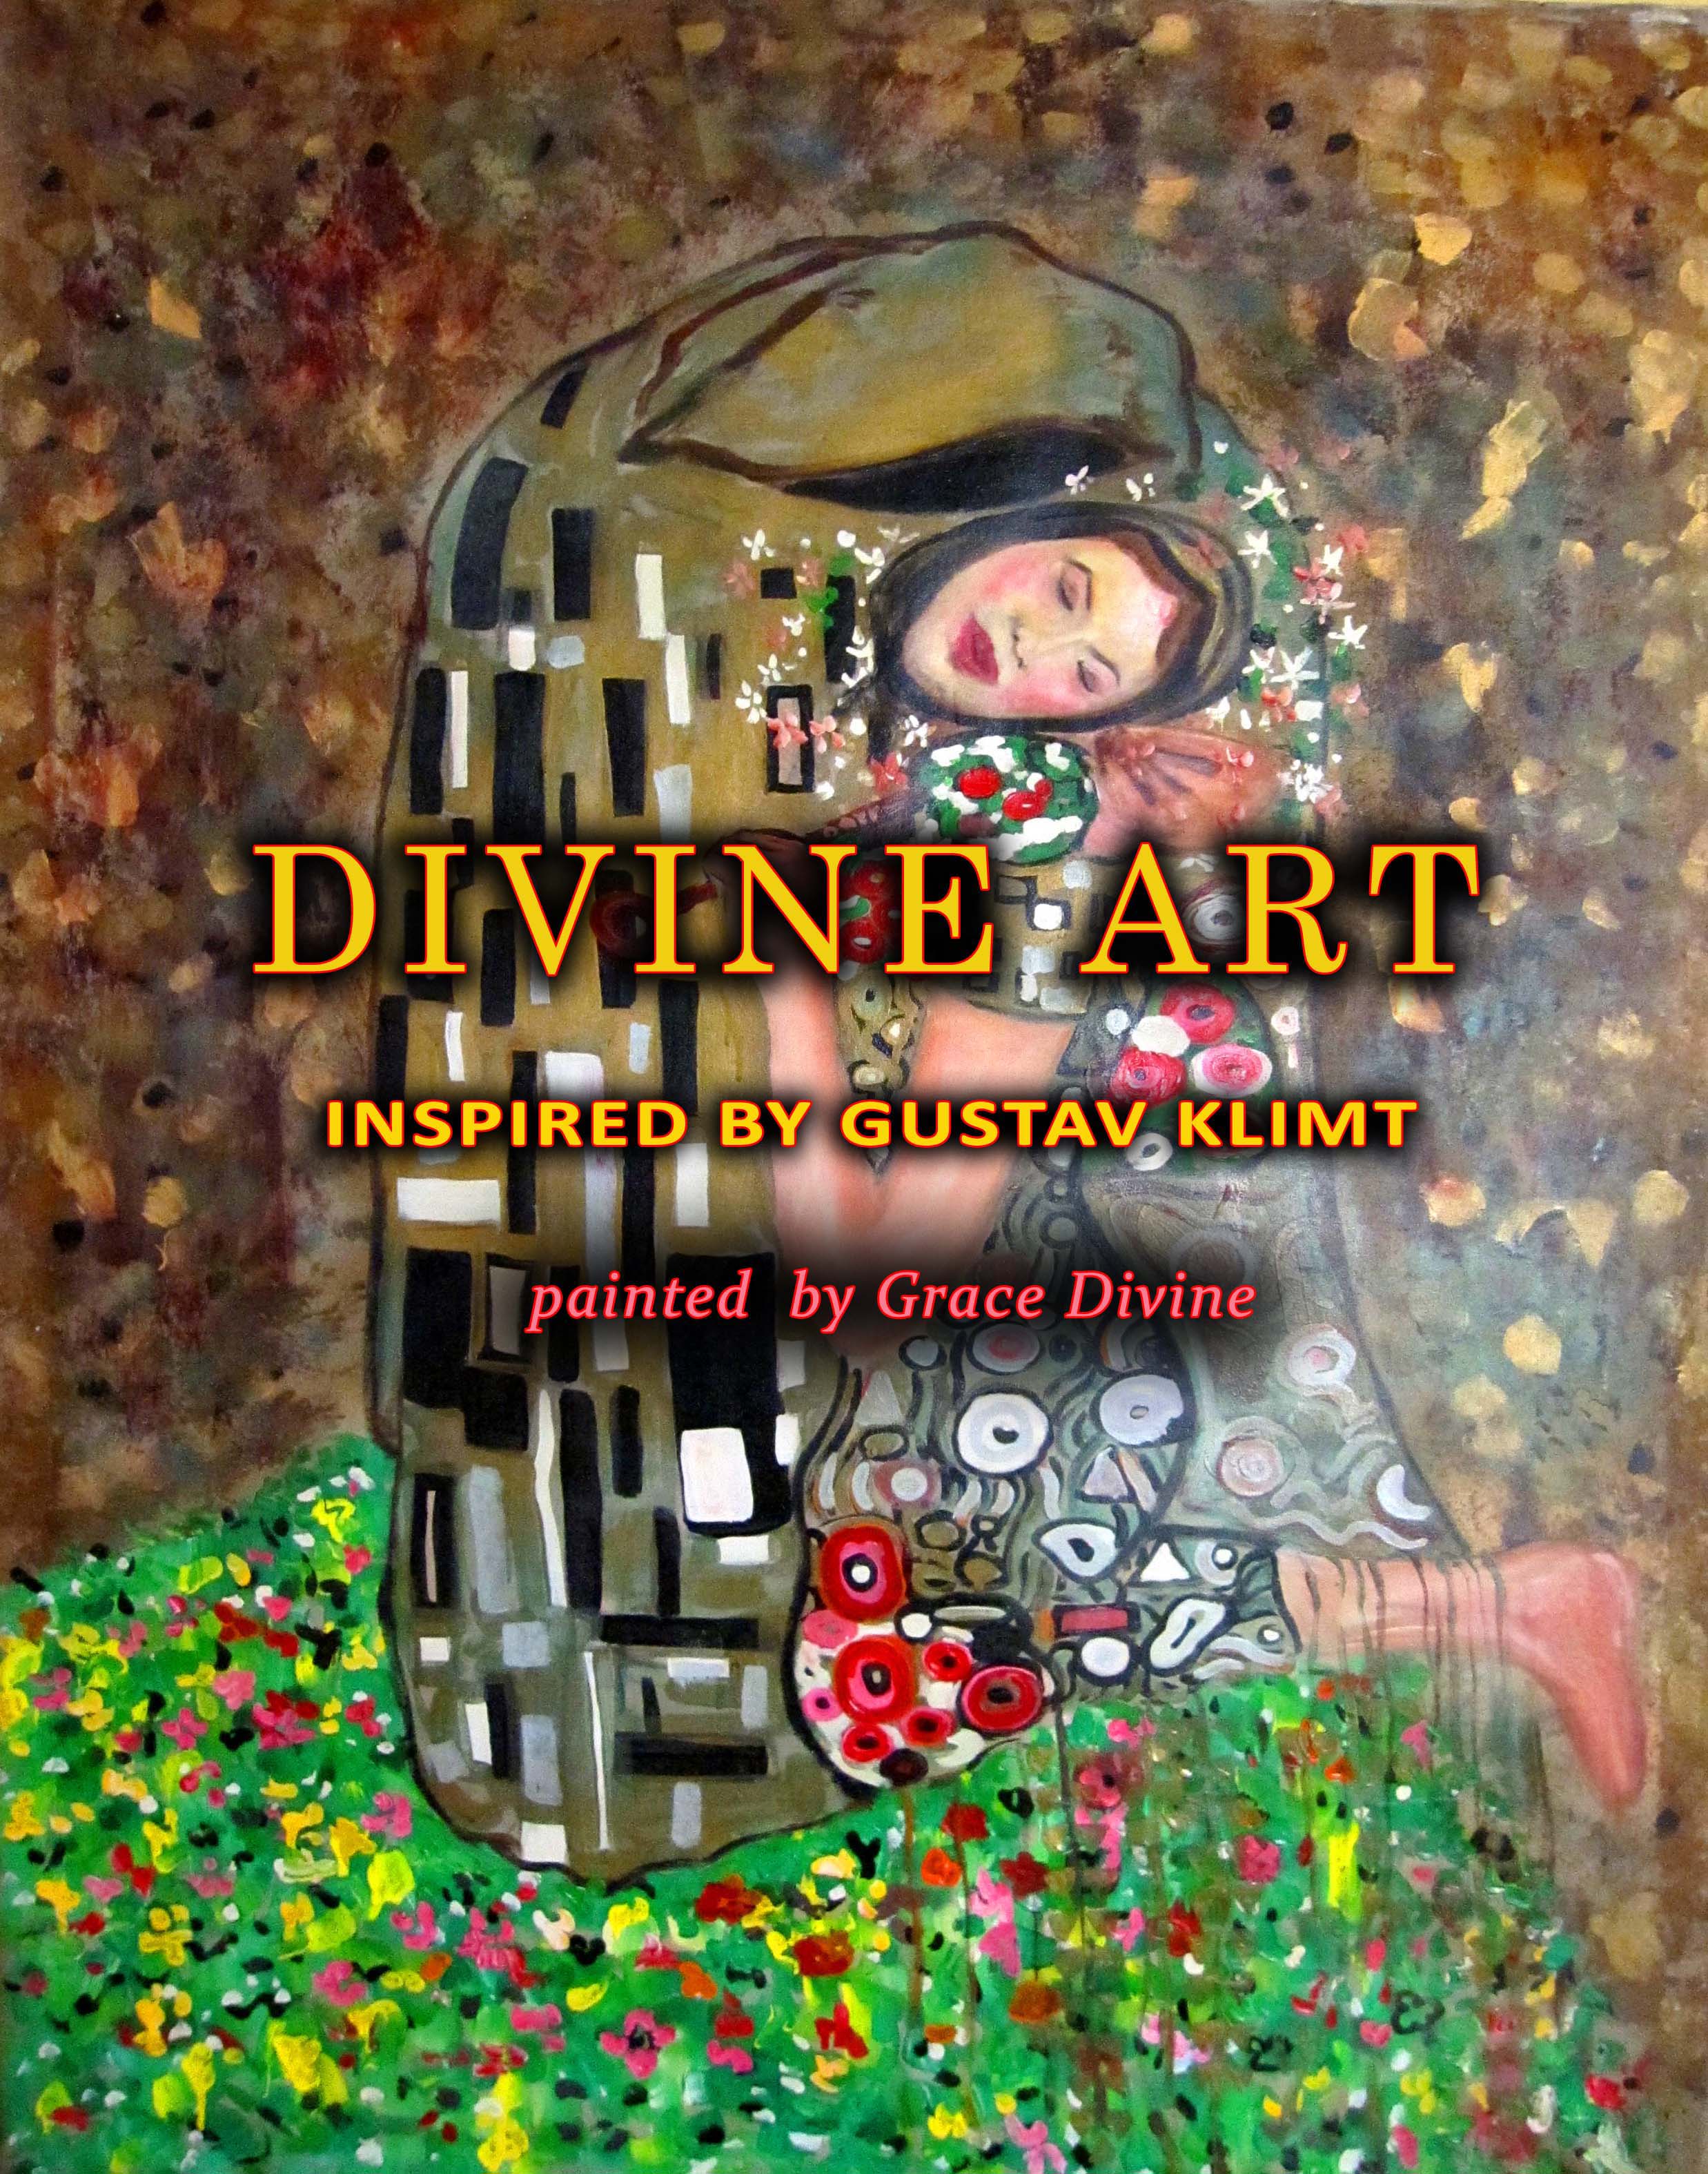 Gustav Klimt, symbolism, art, paintings, kiss, surreal, surrealism, biography, museum inspired  